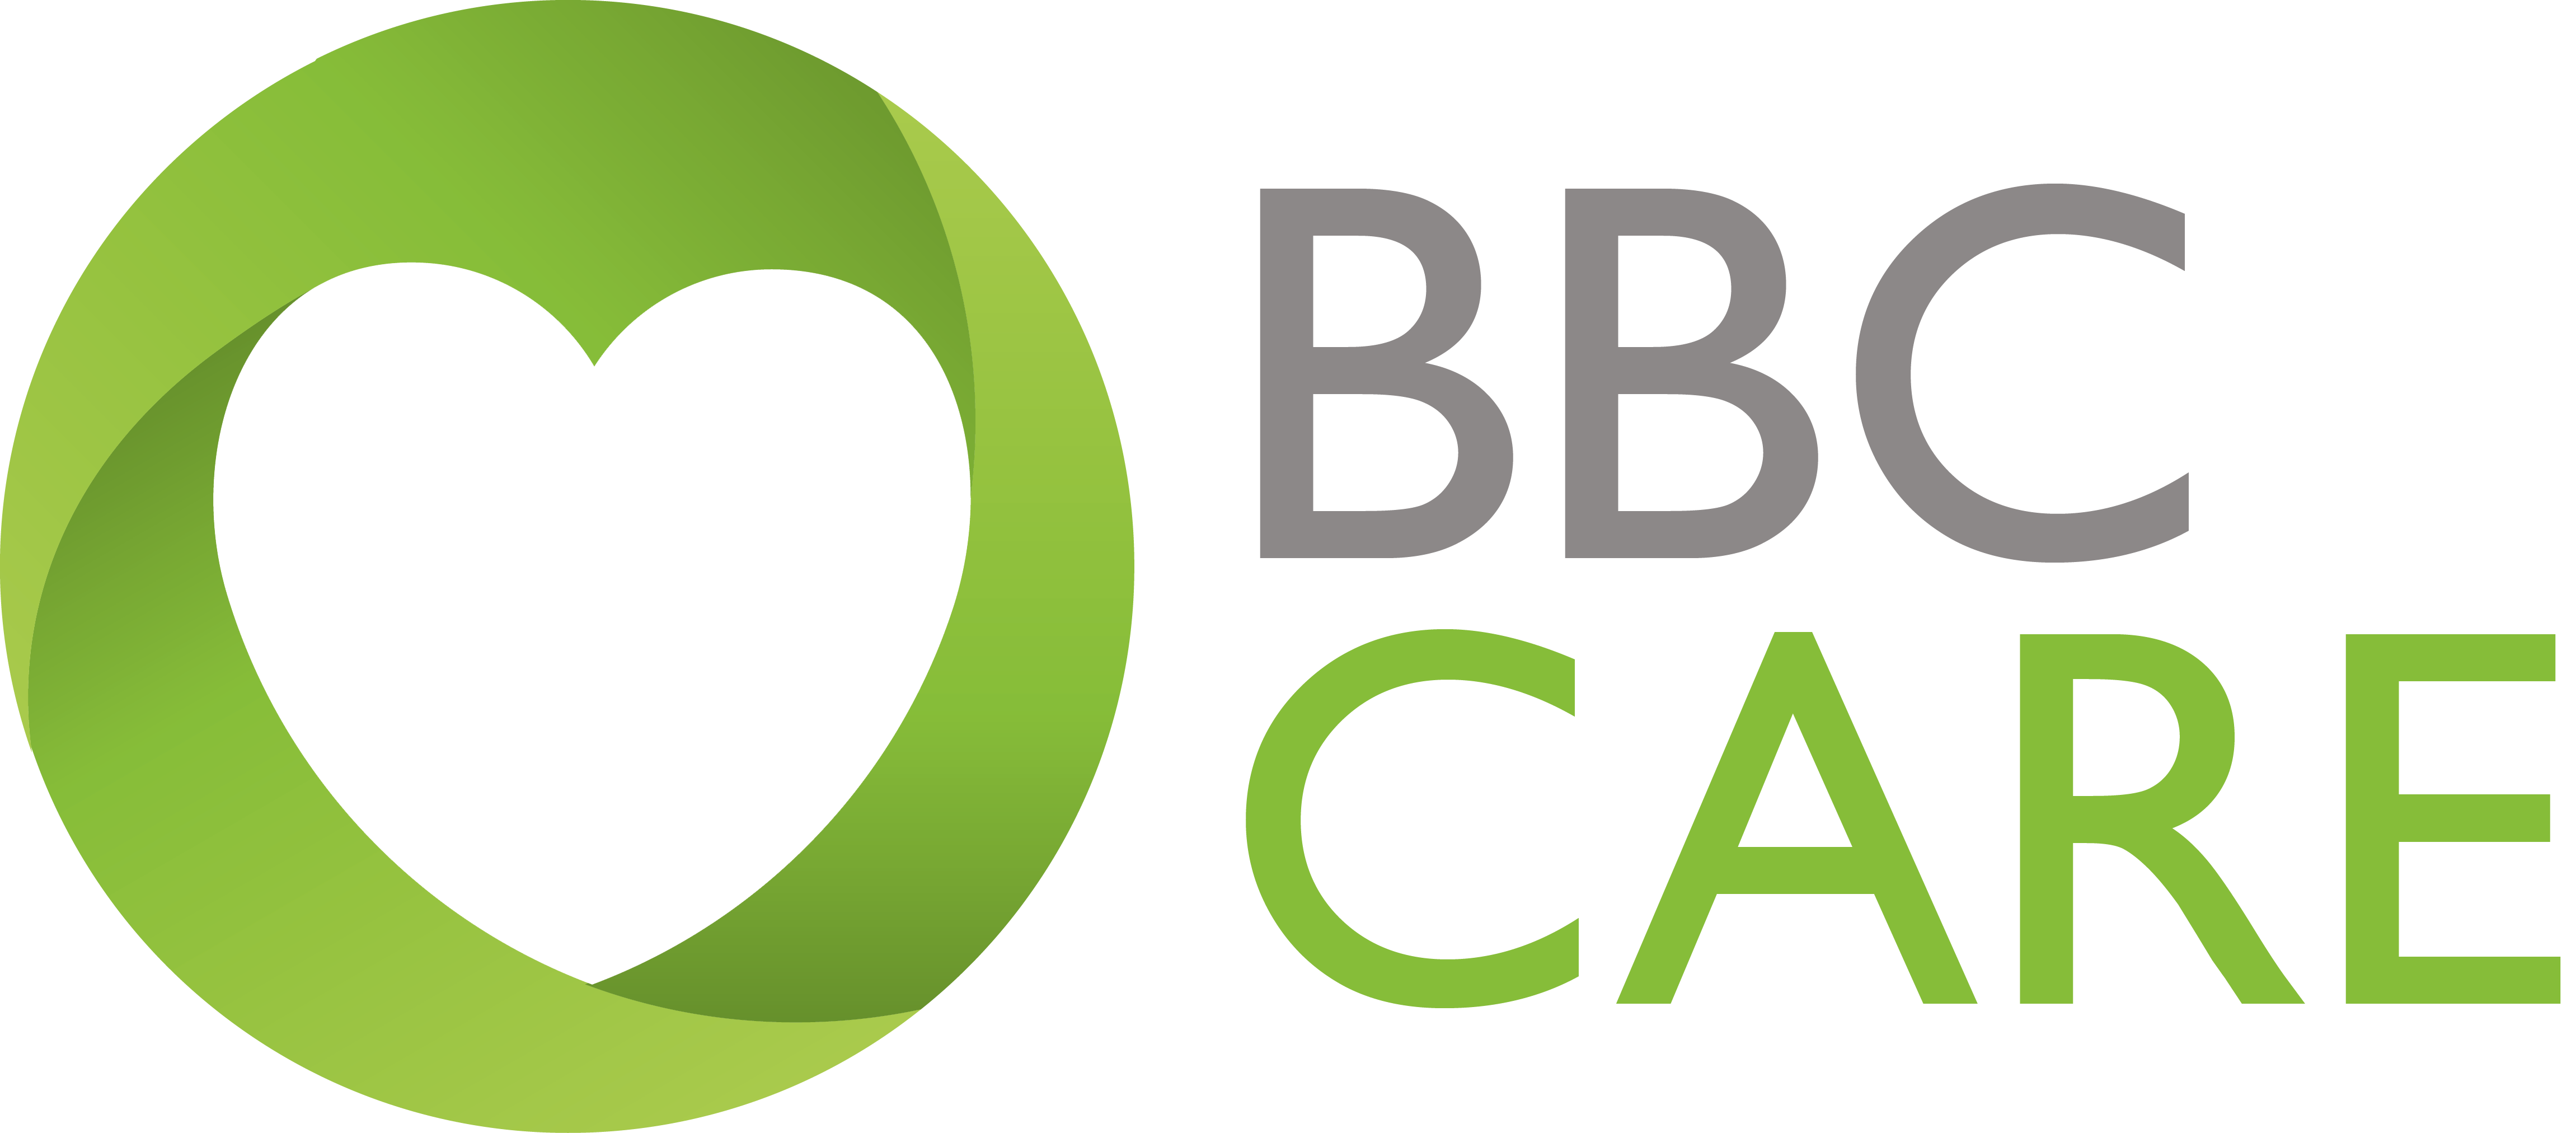 BBC Care Logo Large